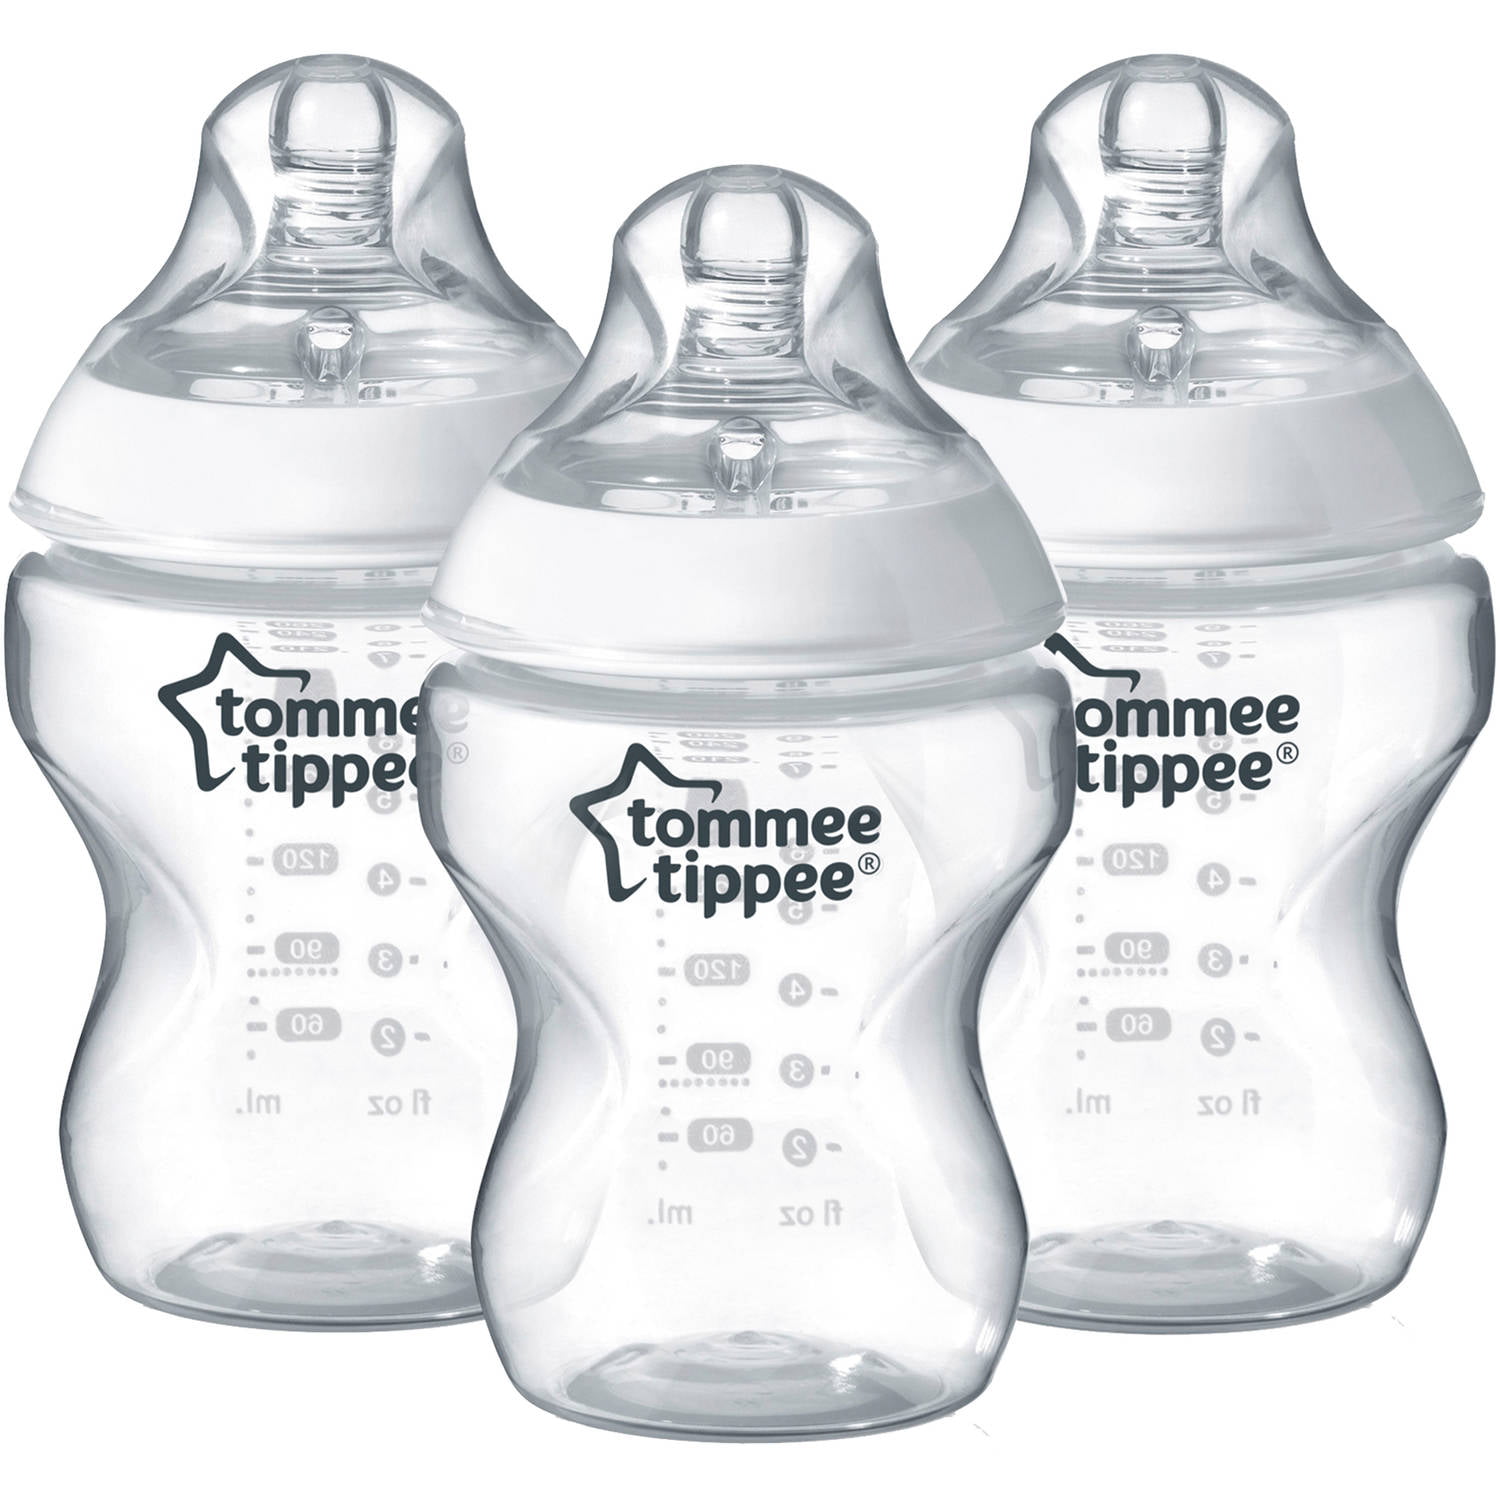 price of tommee tippee bottles